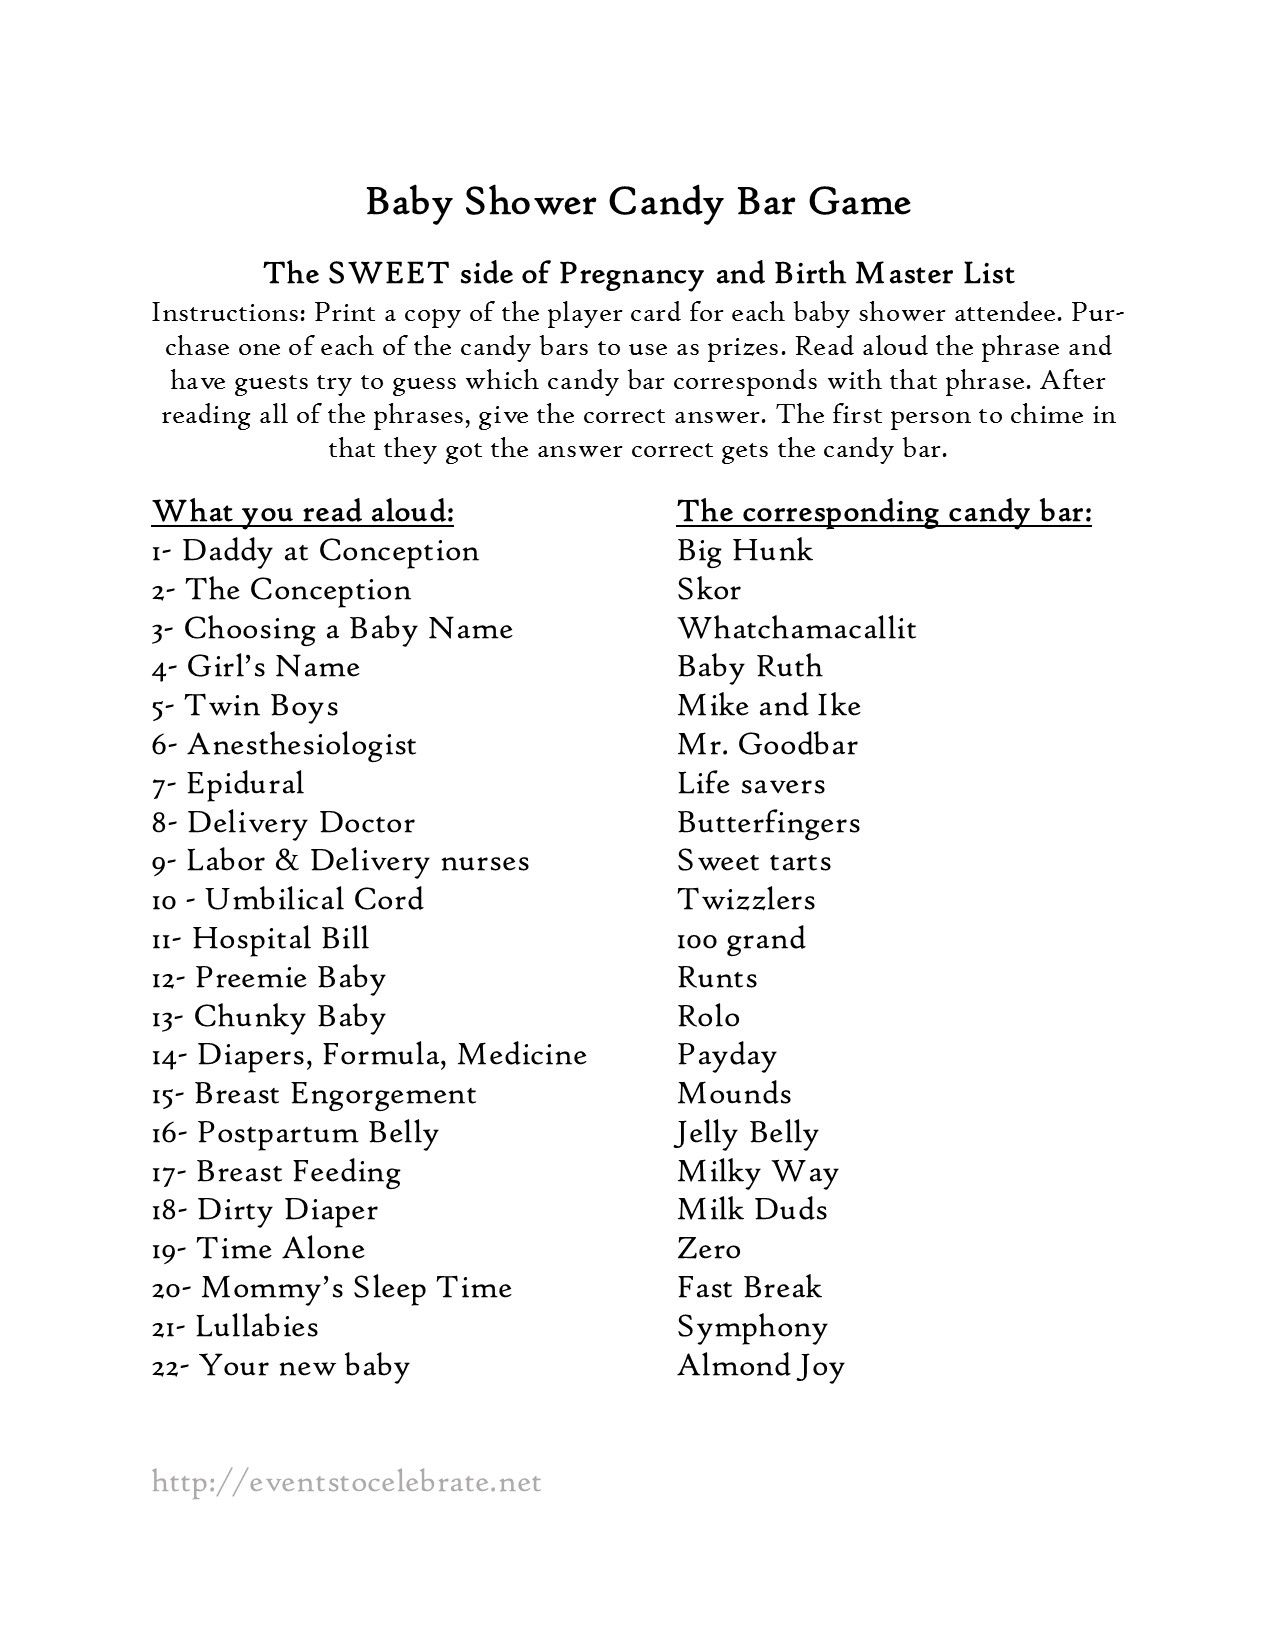 Baby Shower Games | Baby Shower | Pinterest | Baby Shower Games - Candy Bar Baby Shower Game Free Printable